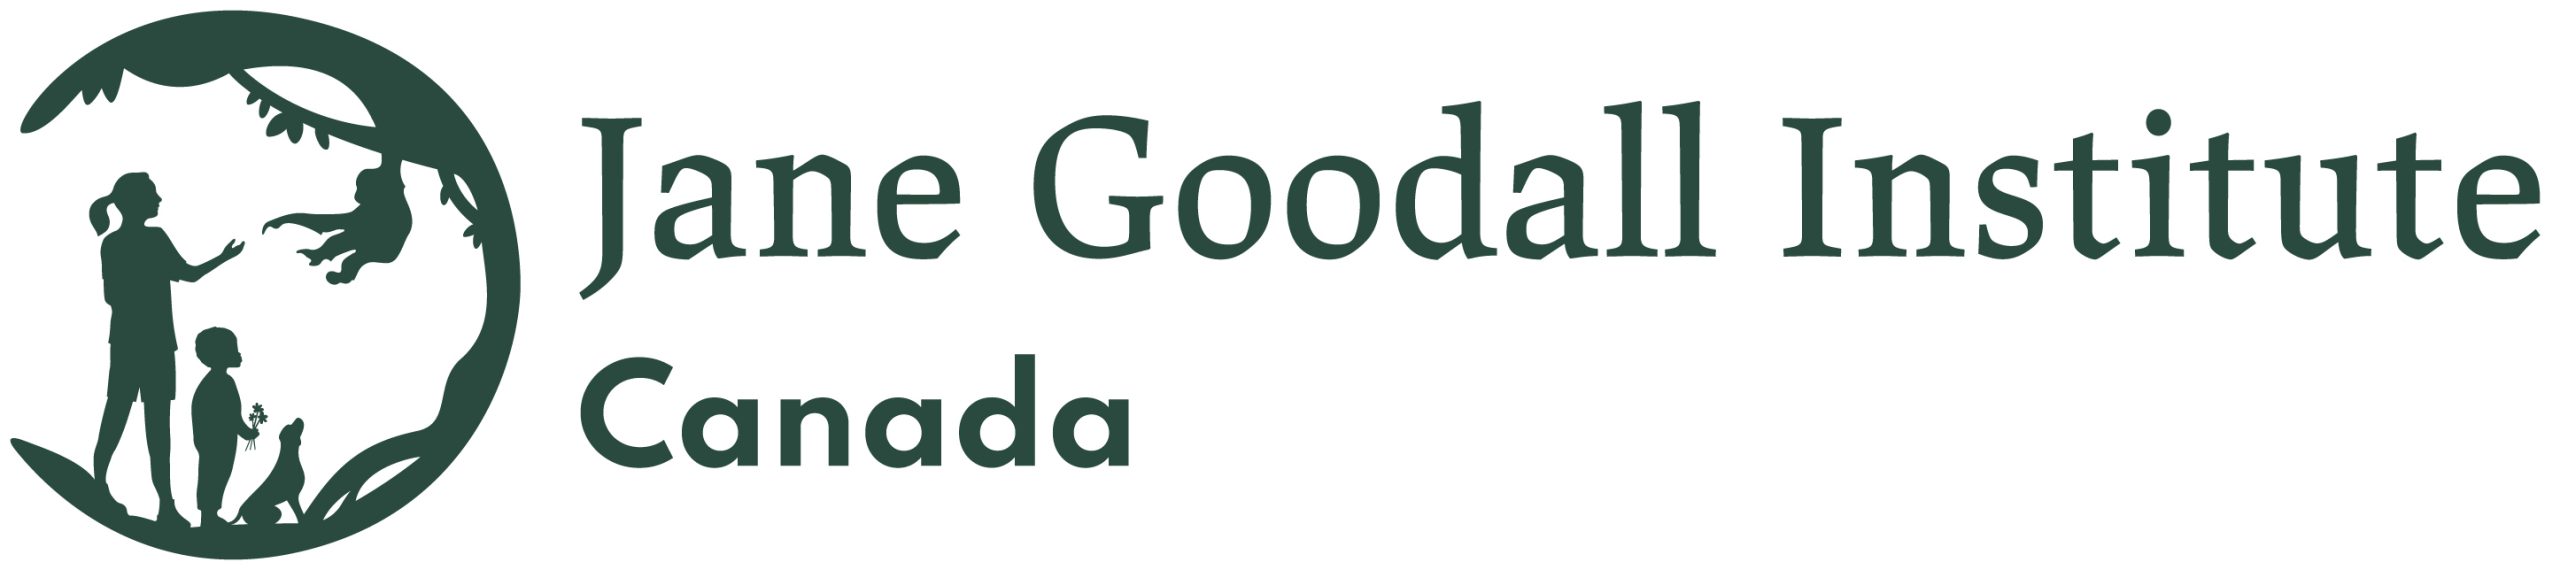 Jane Goodall Institute of Canada - Logo